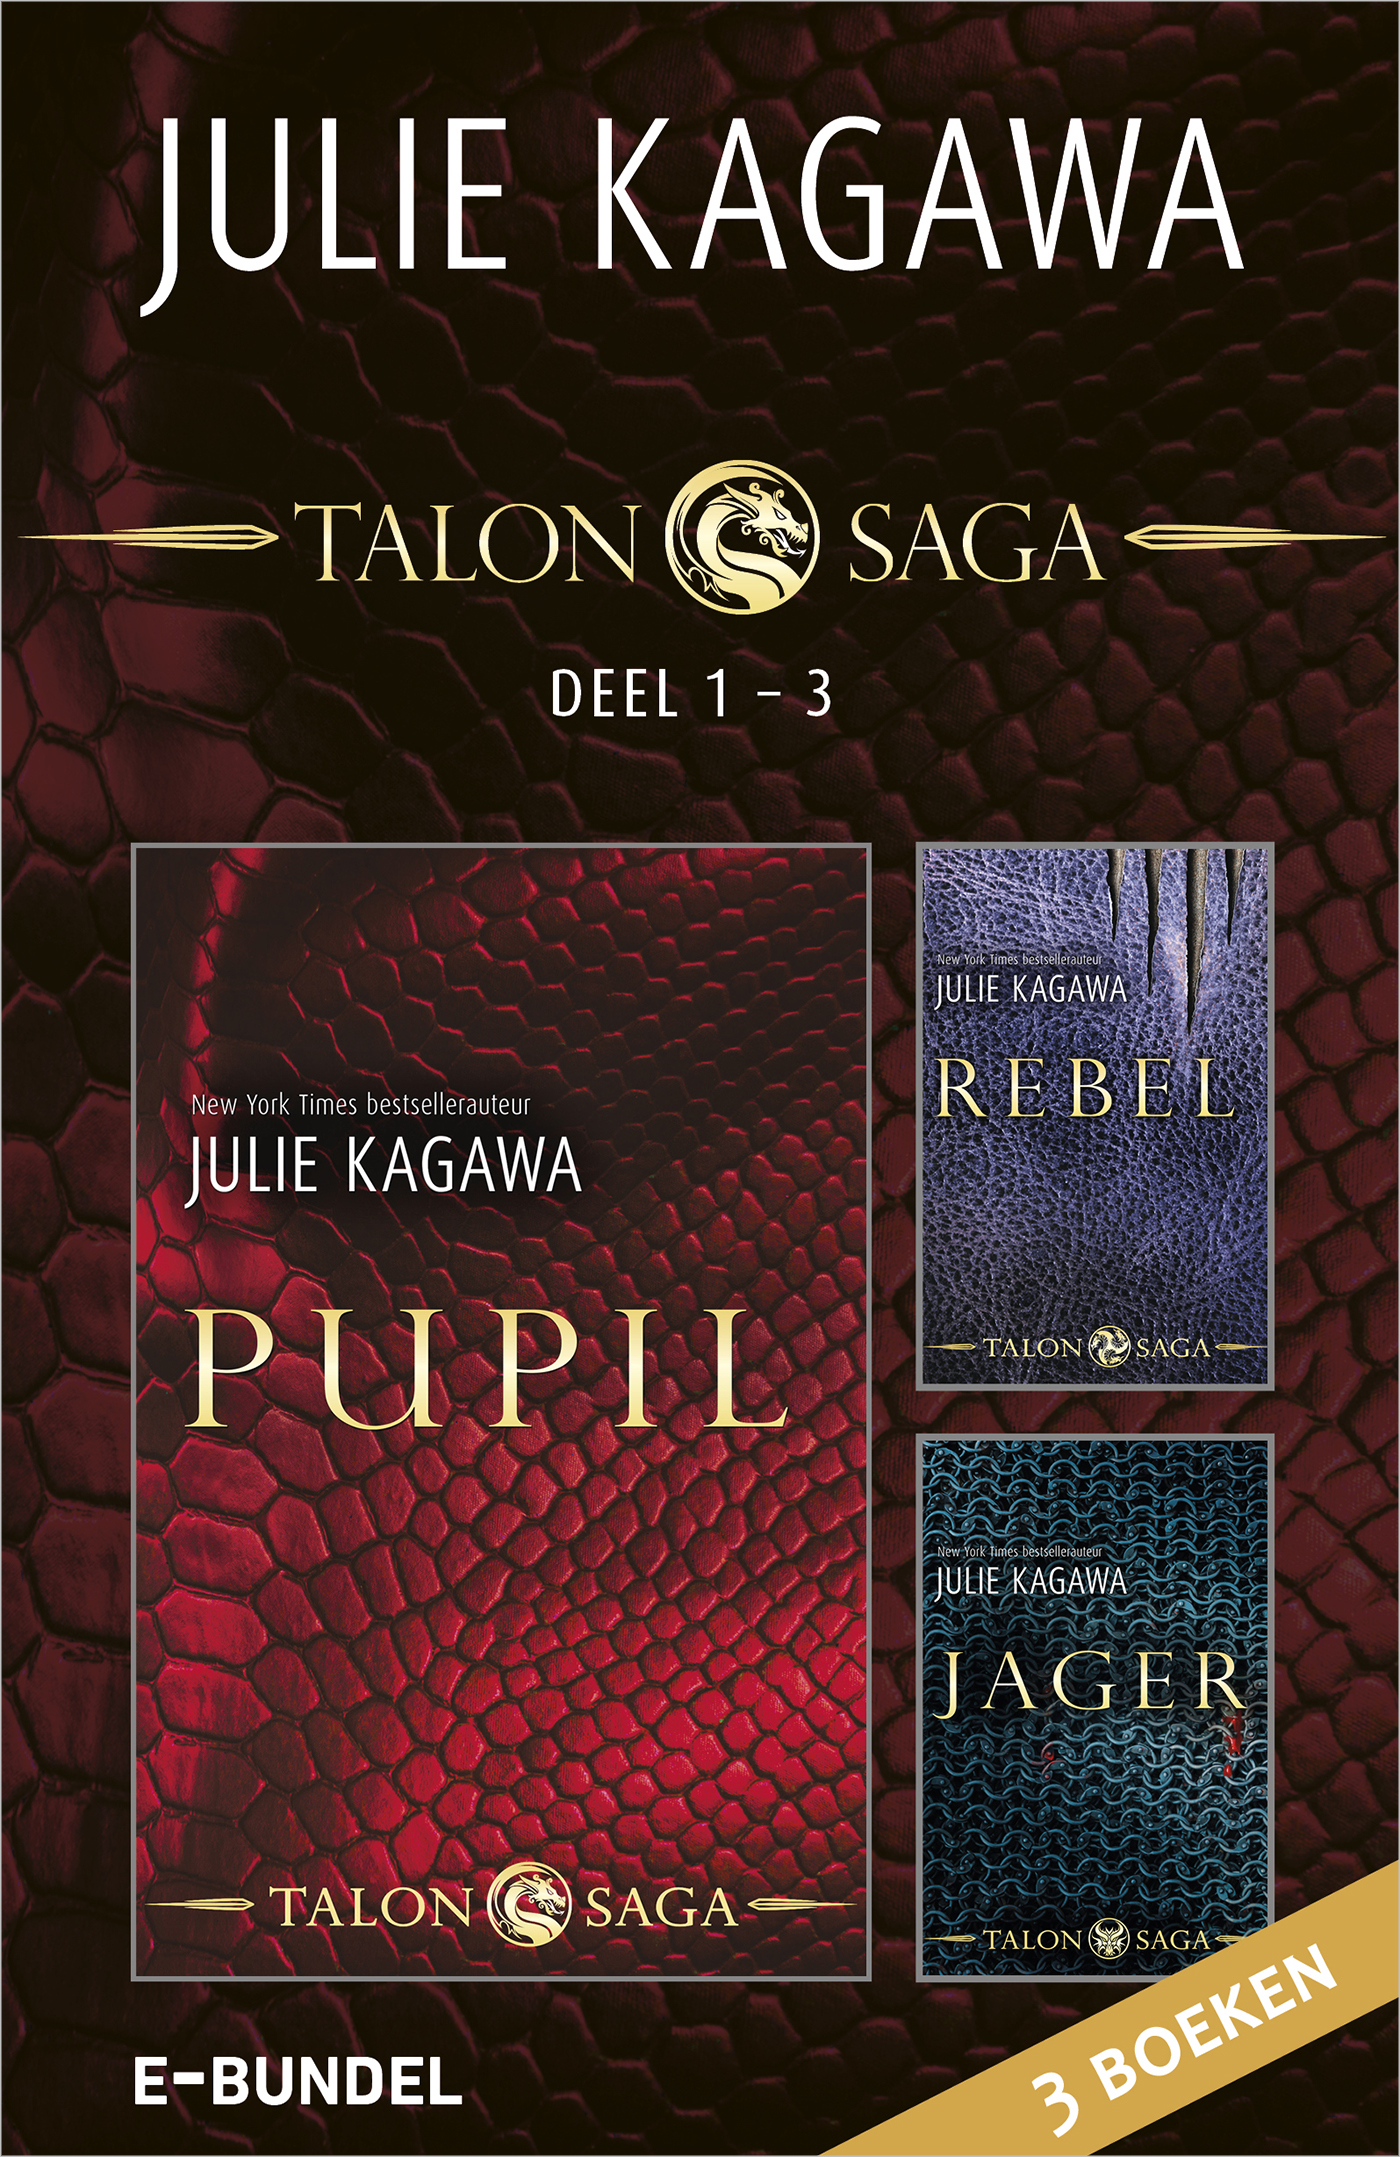 Talon-saga deel 1-3 (Ebook)